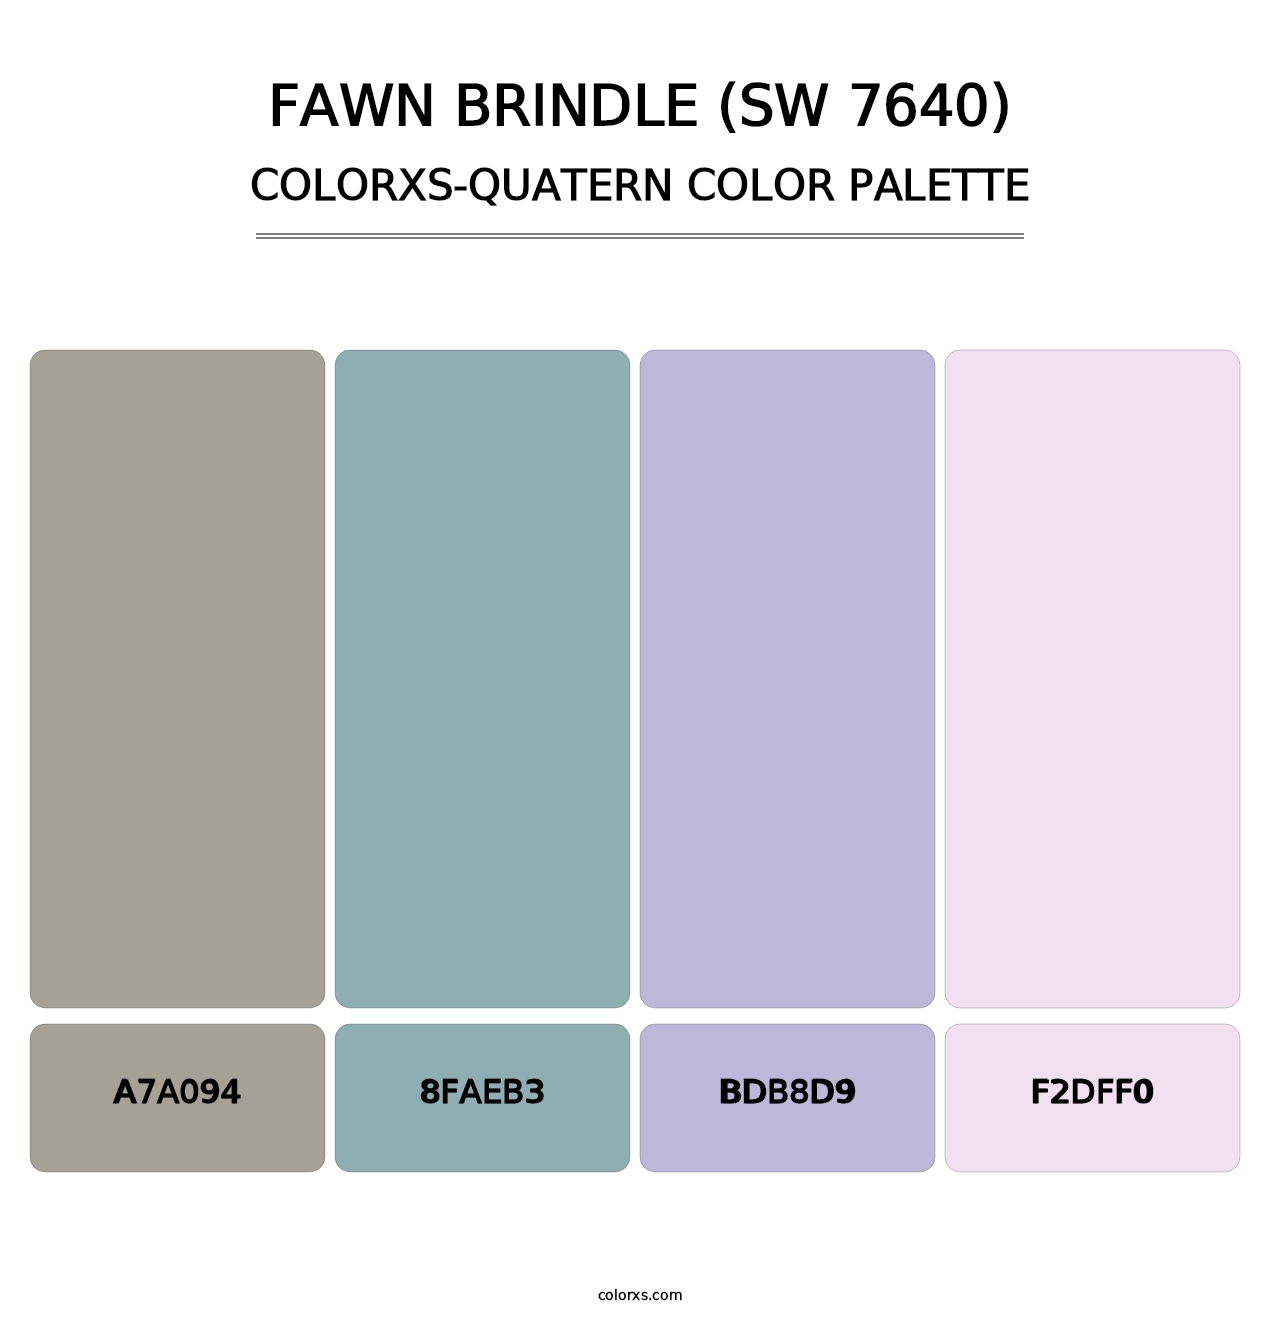 Fawn Brindle (SW 7640) - Colorxs Quatern Palette